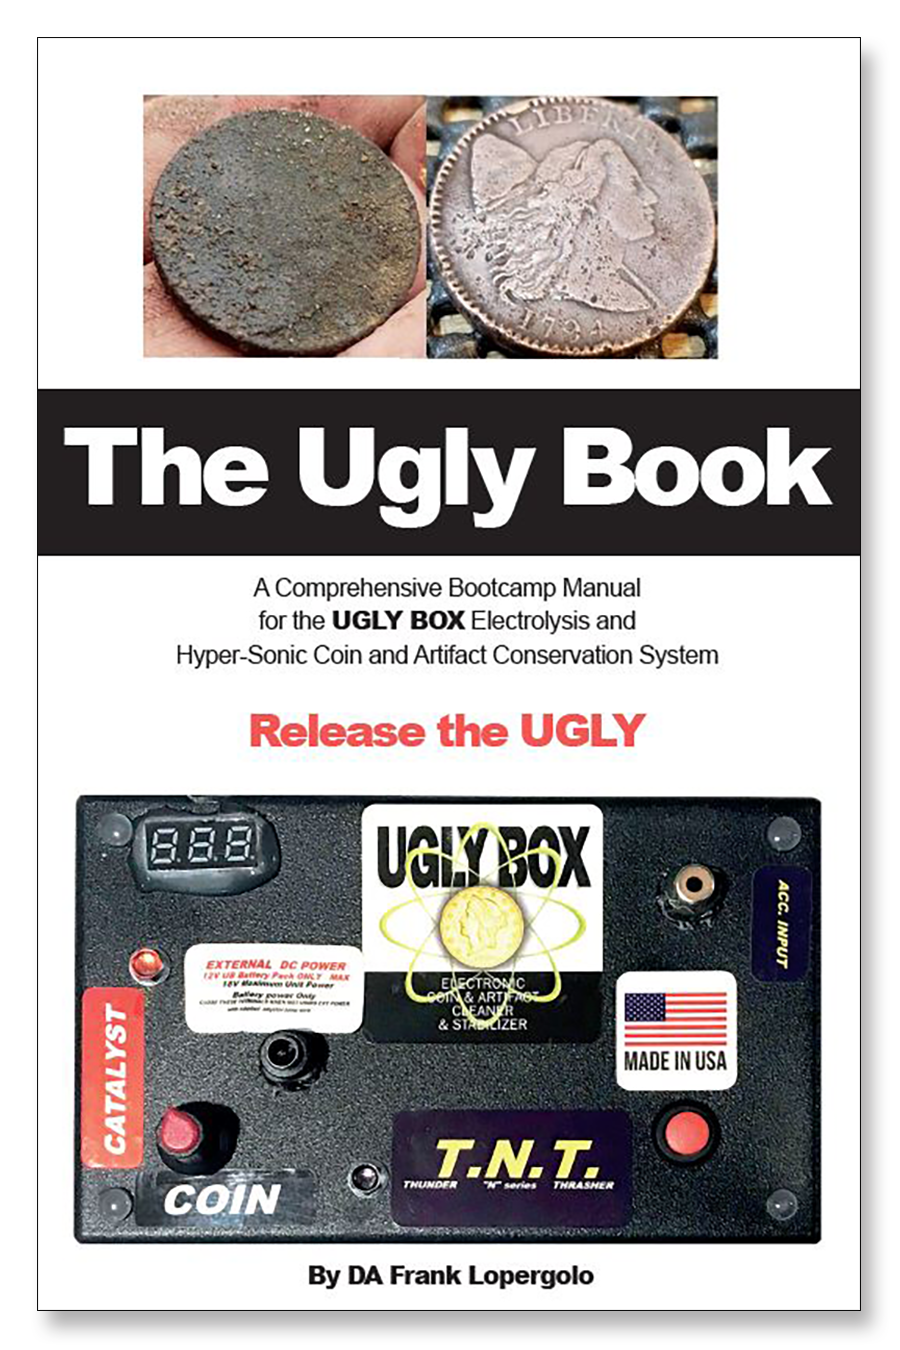 The Ugly Book by DA Frank Lopergolo